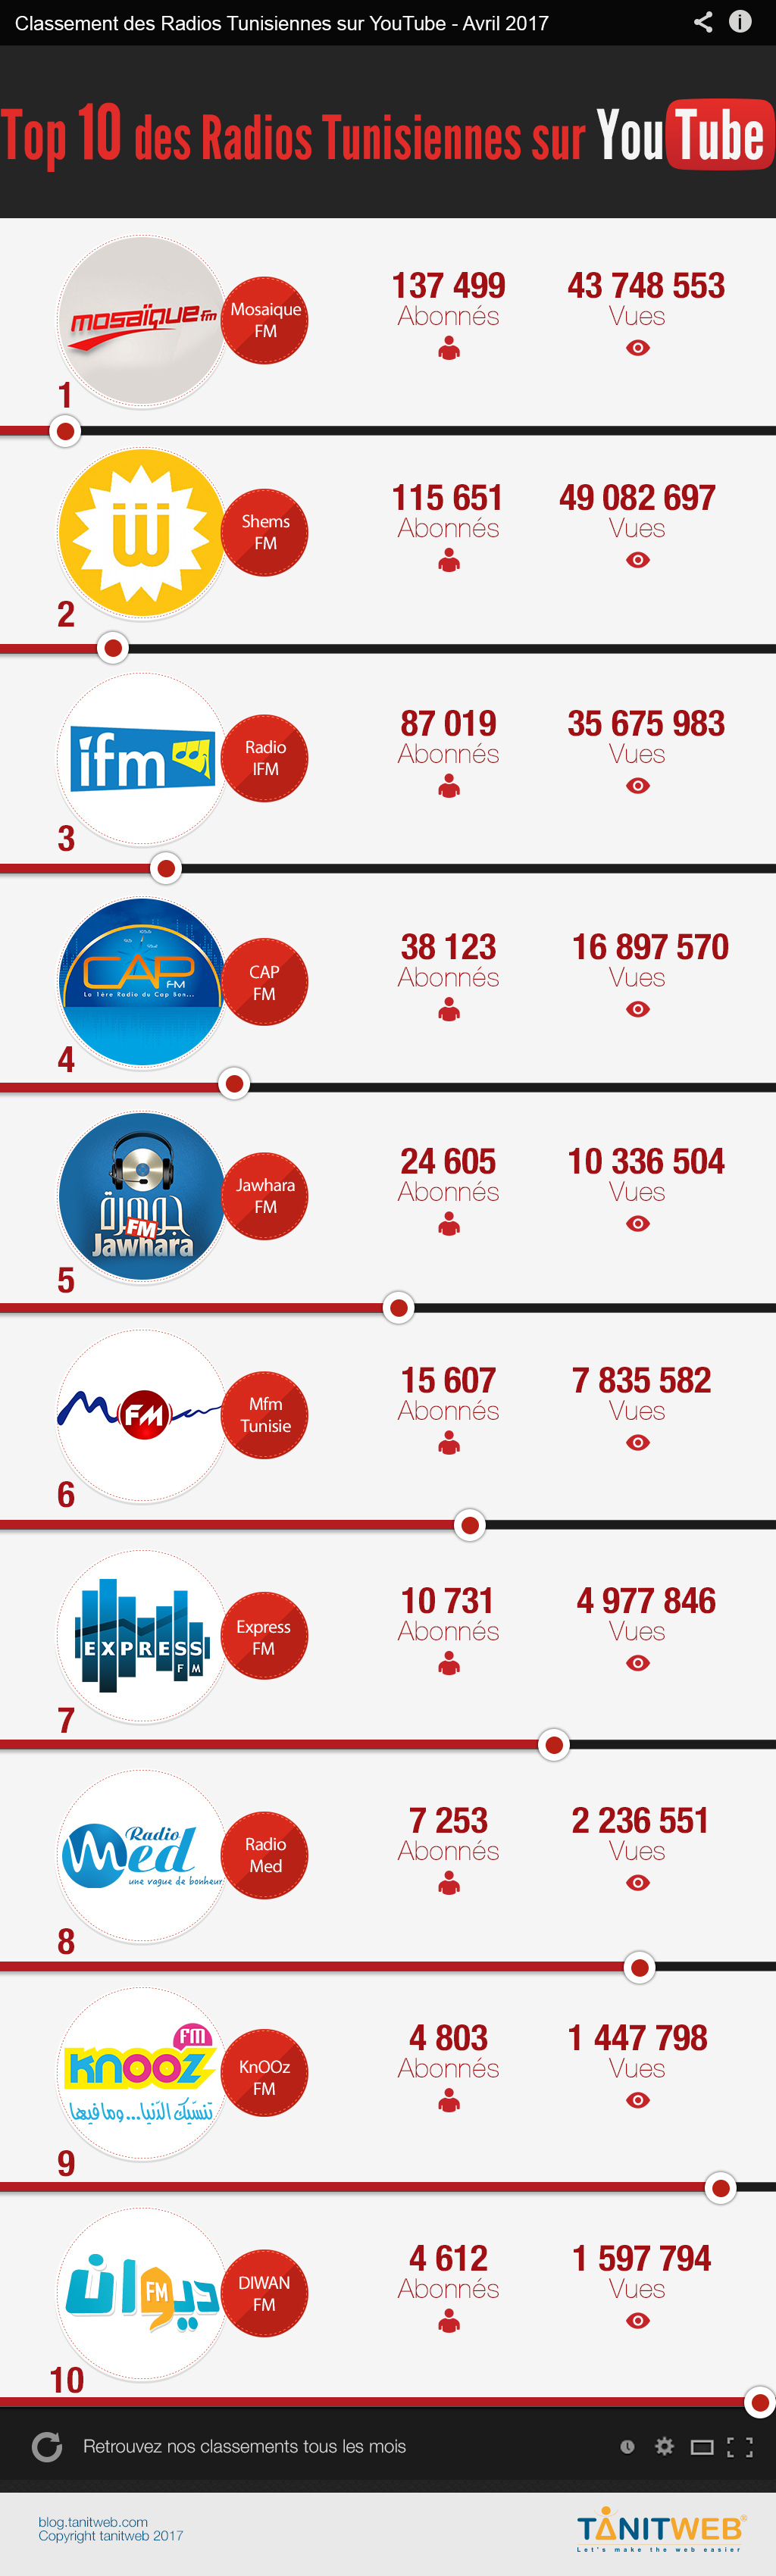 Avril 2017 : TOP 10 des Radios Tunisiennes sur YouTube